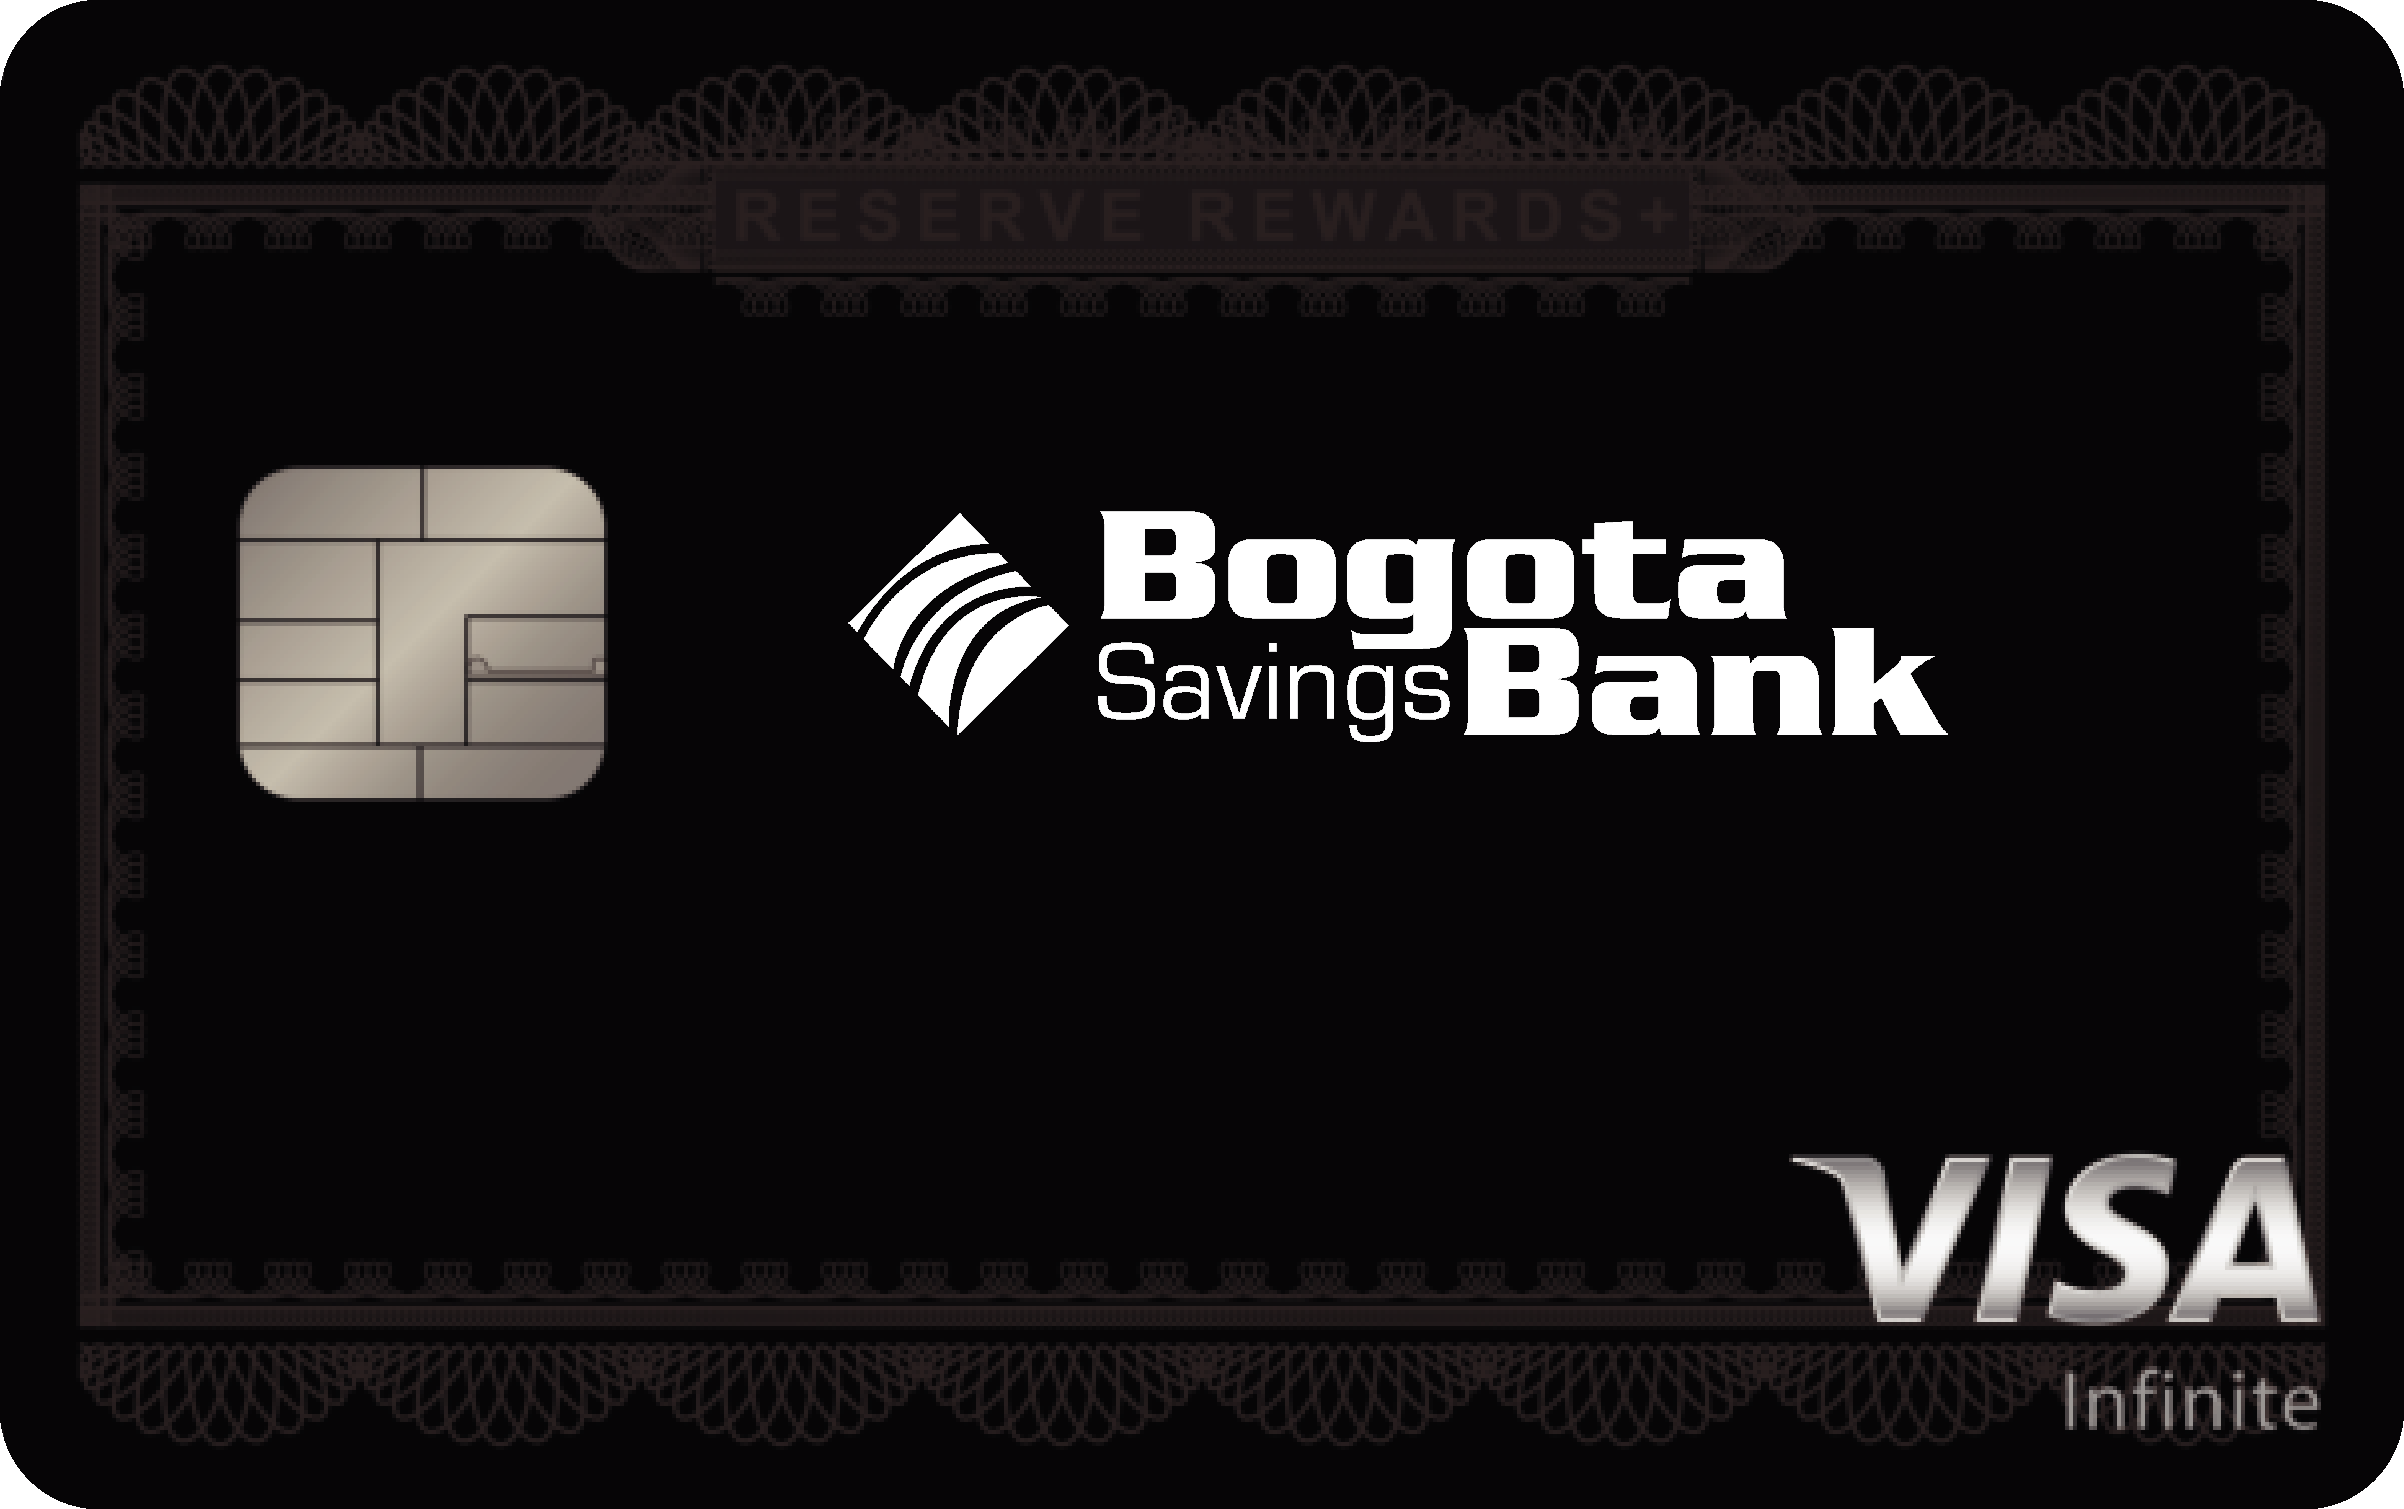 Bogota Savings Bank Reserve Rewards+ Card